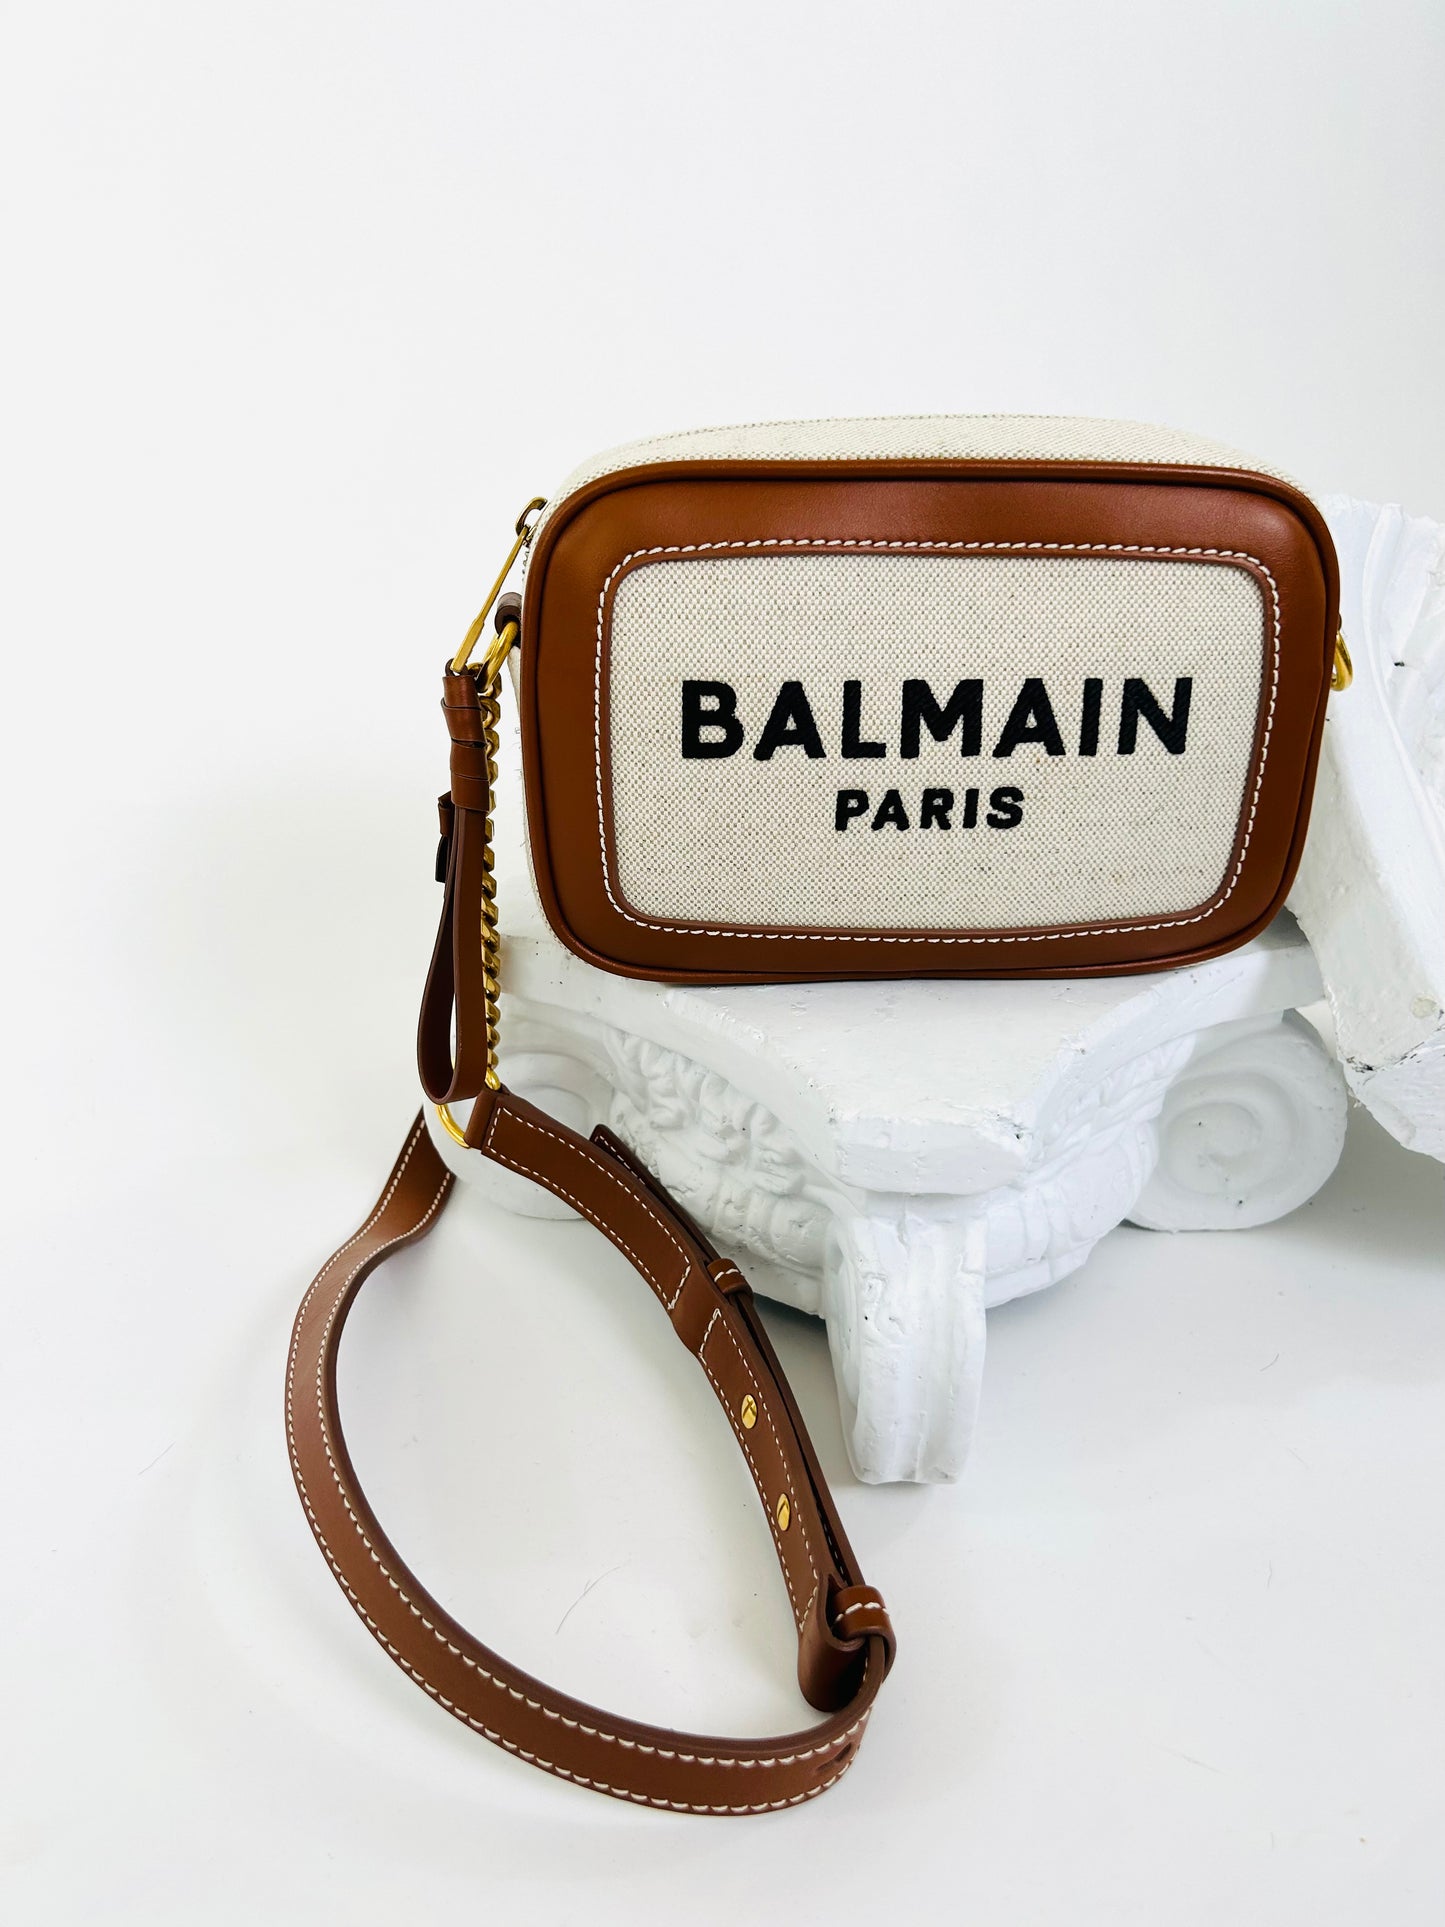 Balmain Paris NWT Handbag